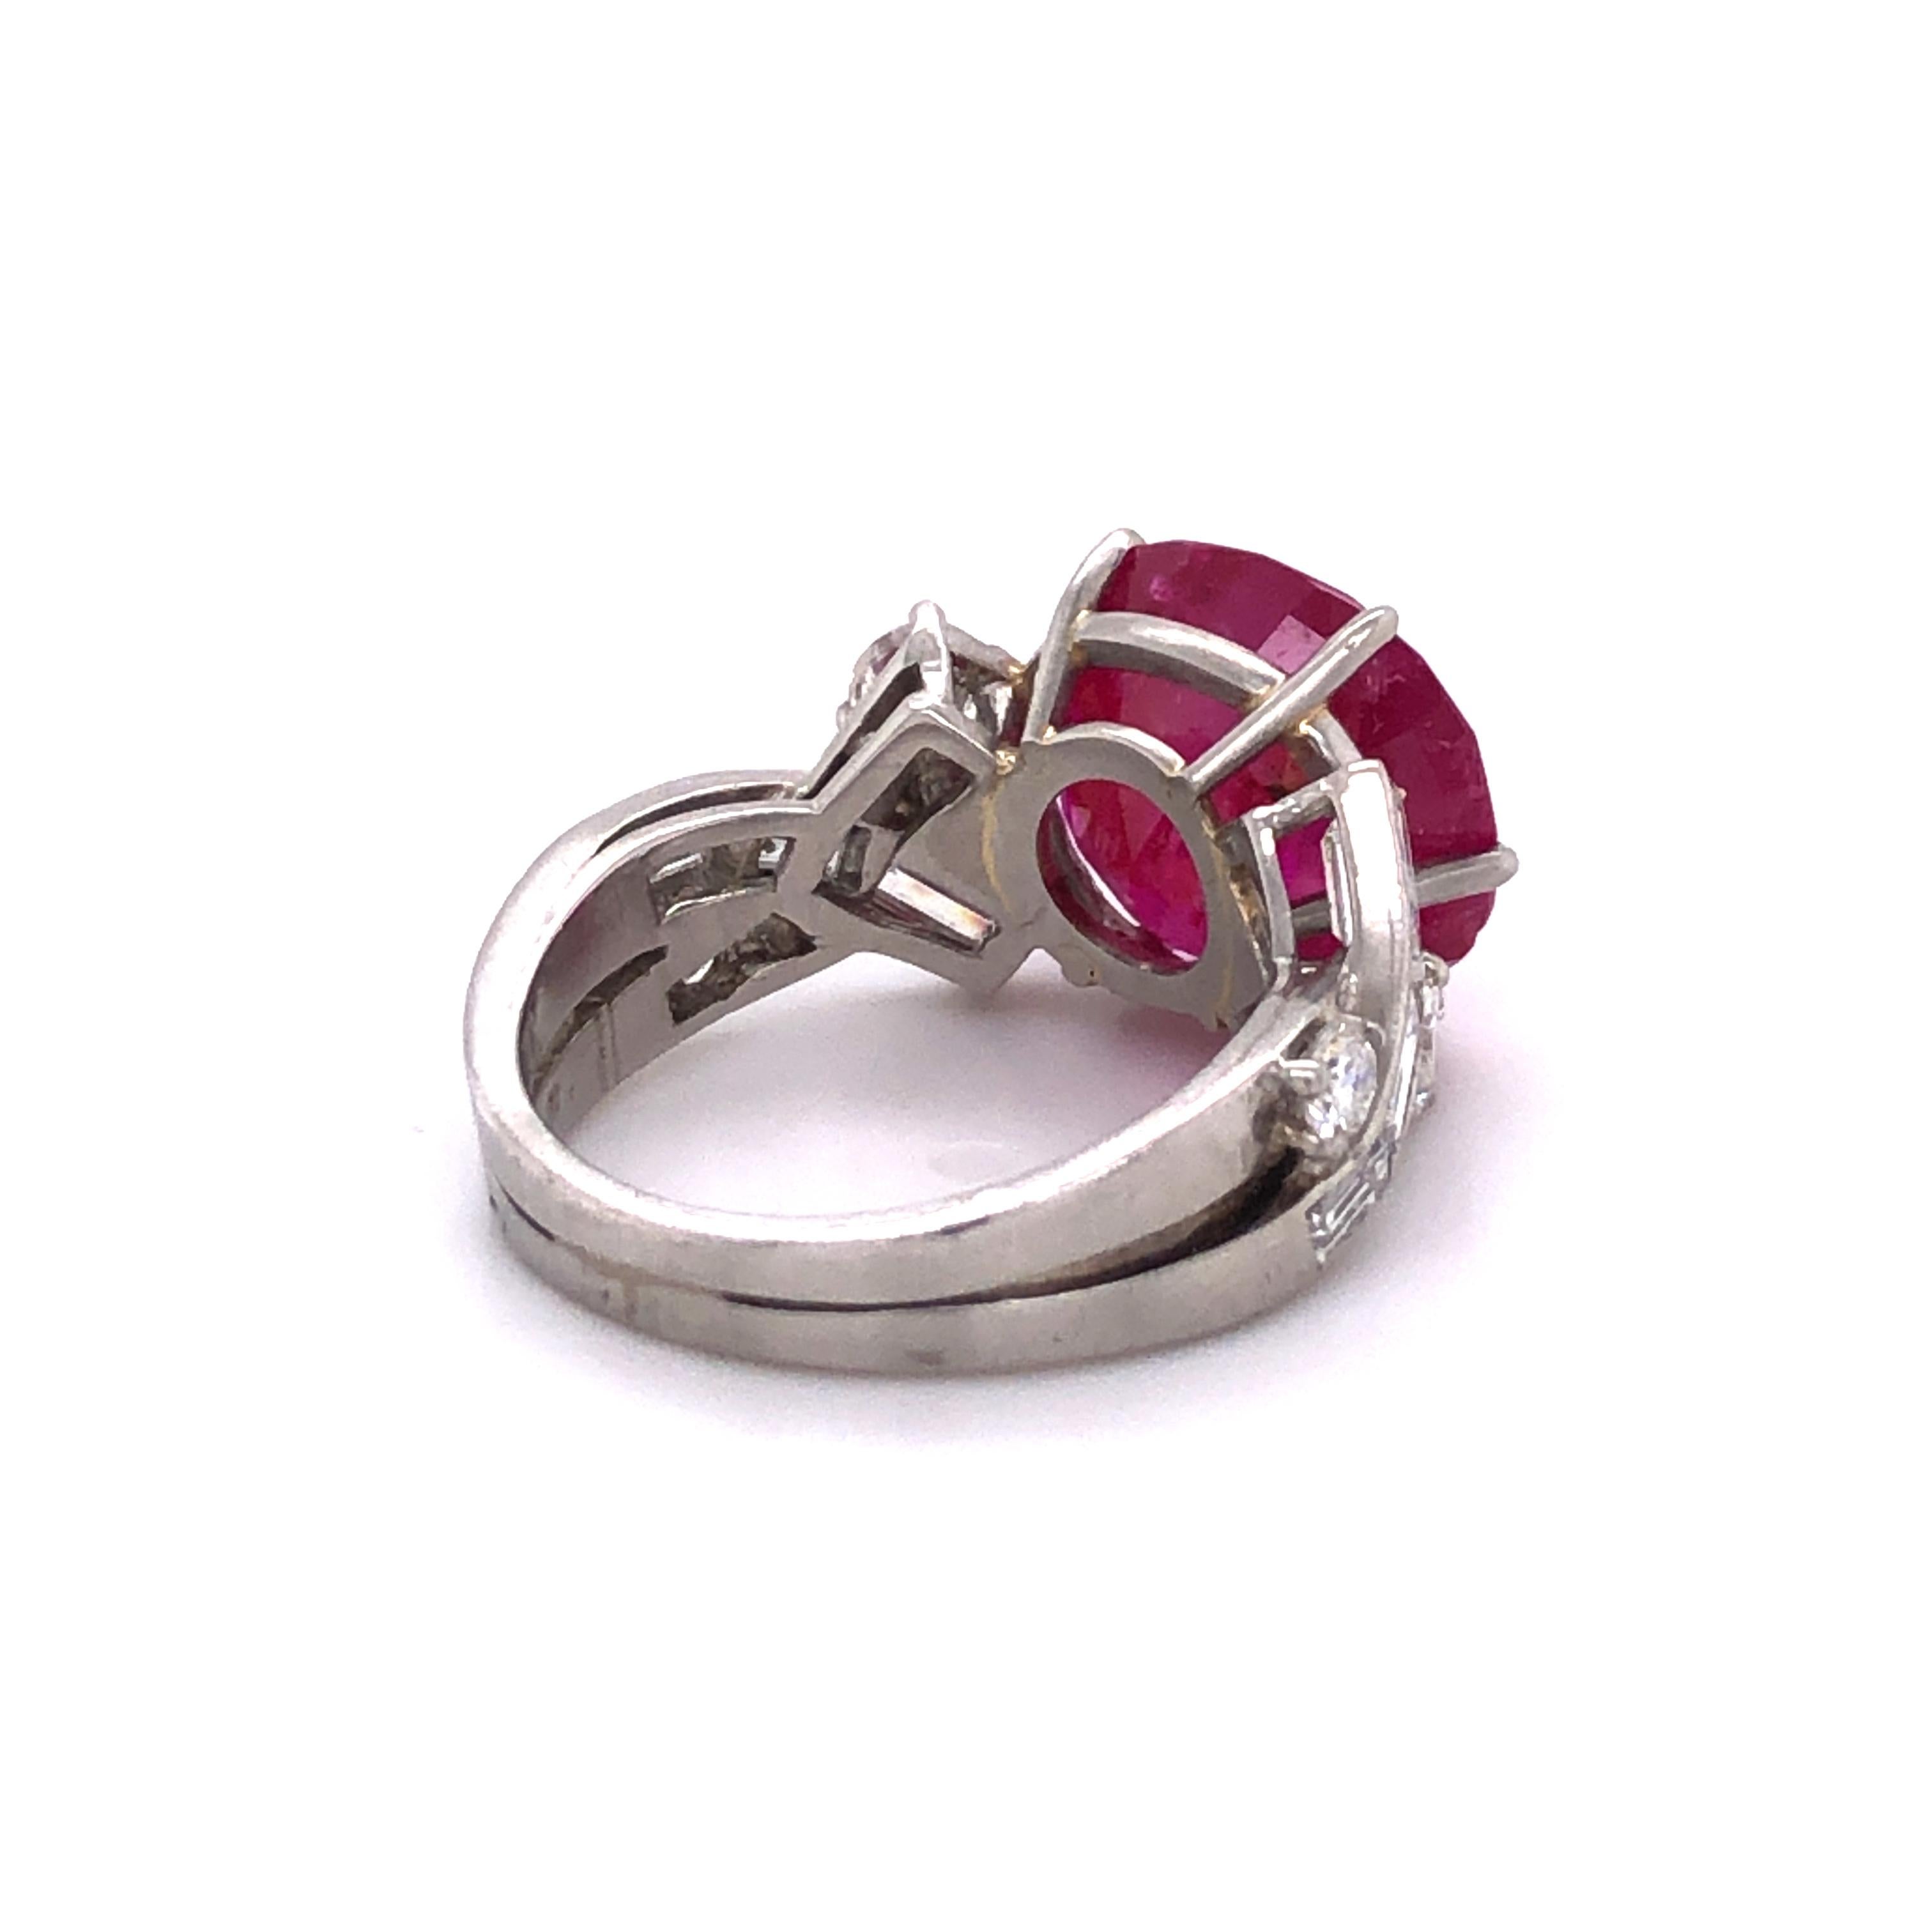 Stunning 10.40 Carat Burma Ruby and Diamond Ring in Platinum 950 2